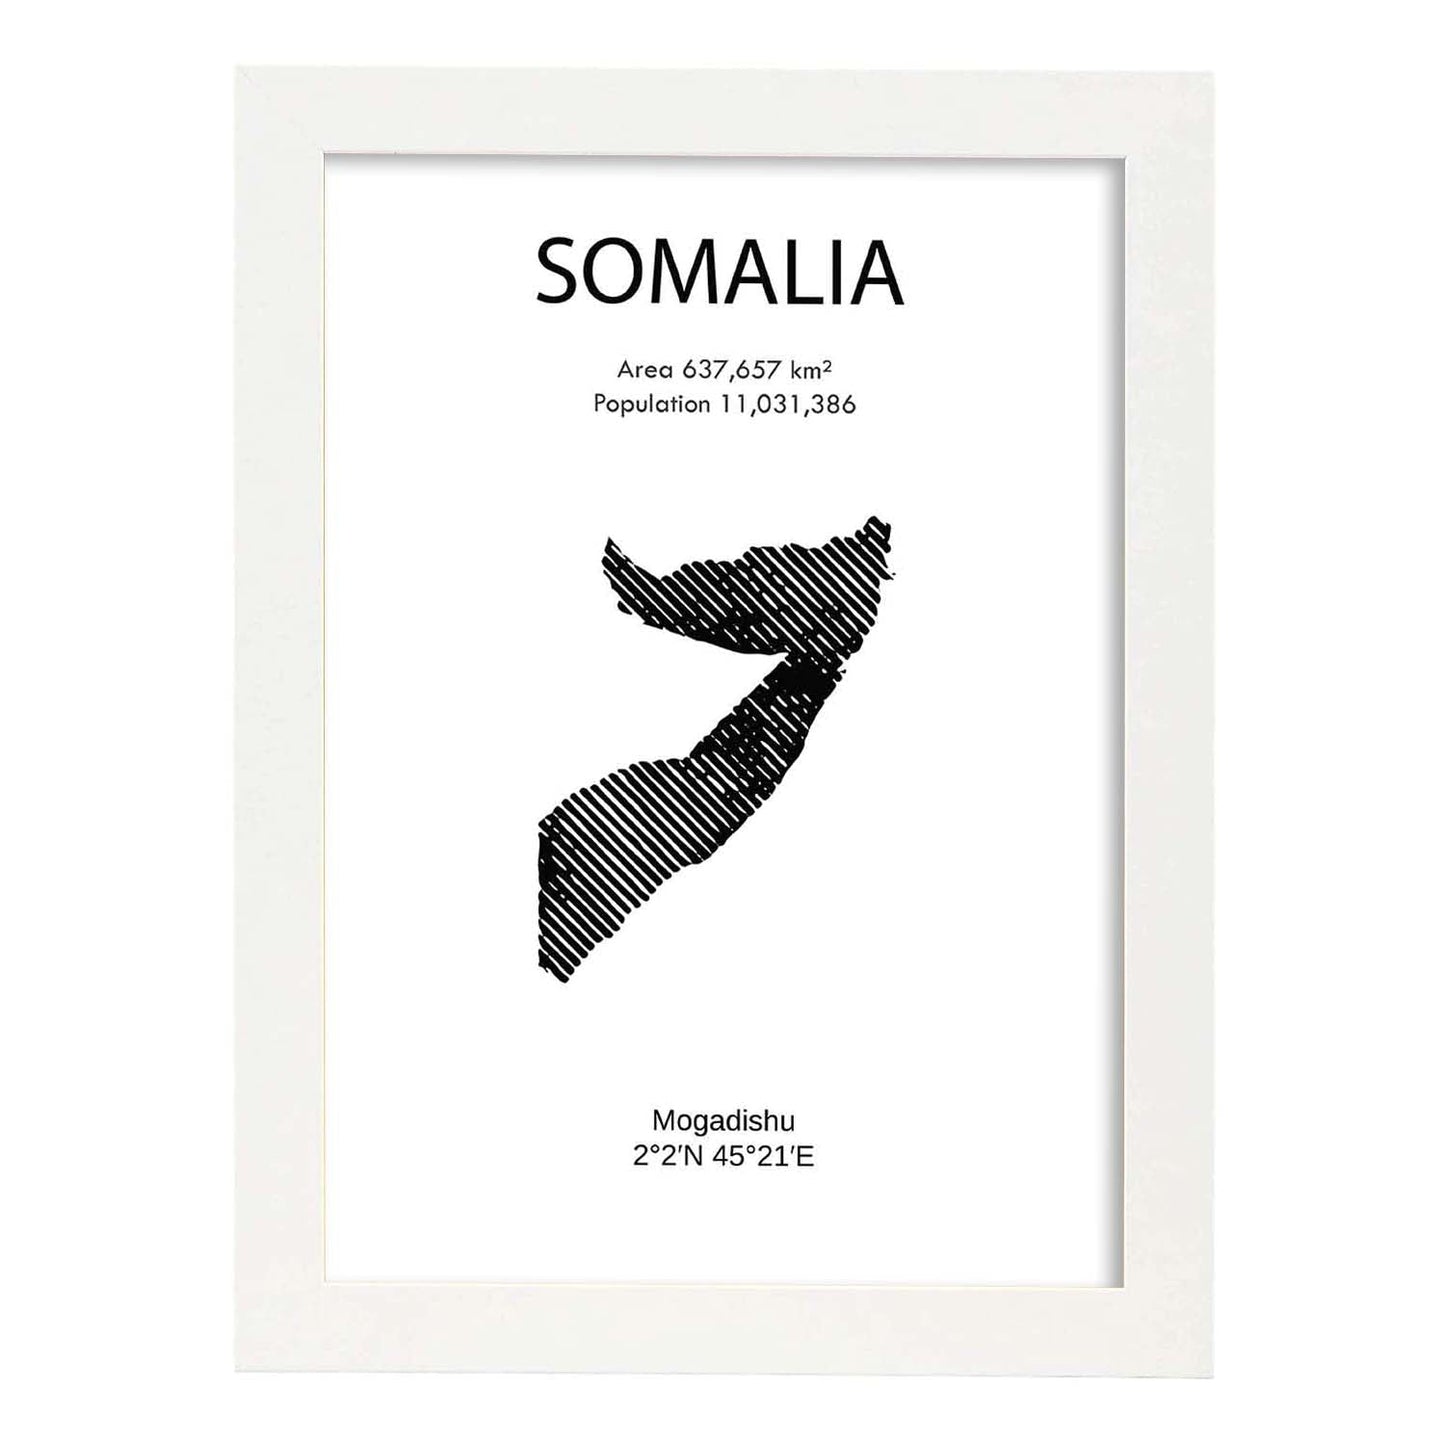 Poster de Somalia. Láminas de paises y continentes del mundo.-Artwork-Nacnic-A4-Marco Blanco-Nacnic Estudio SL